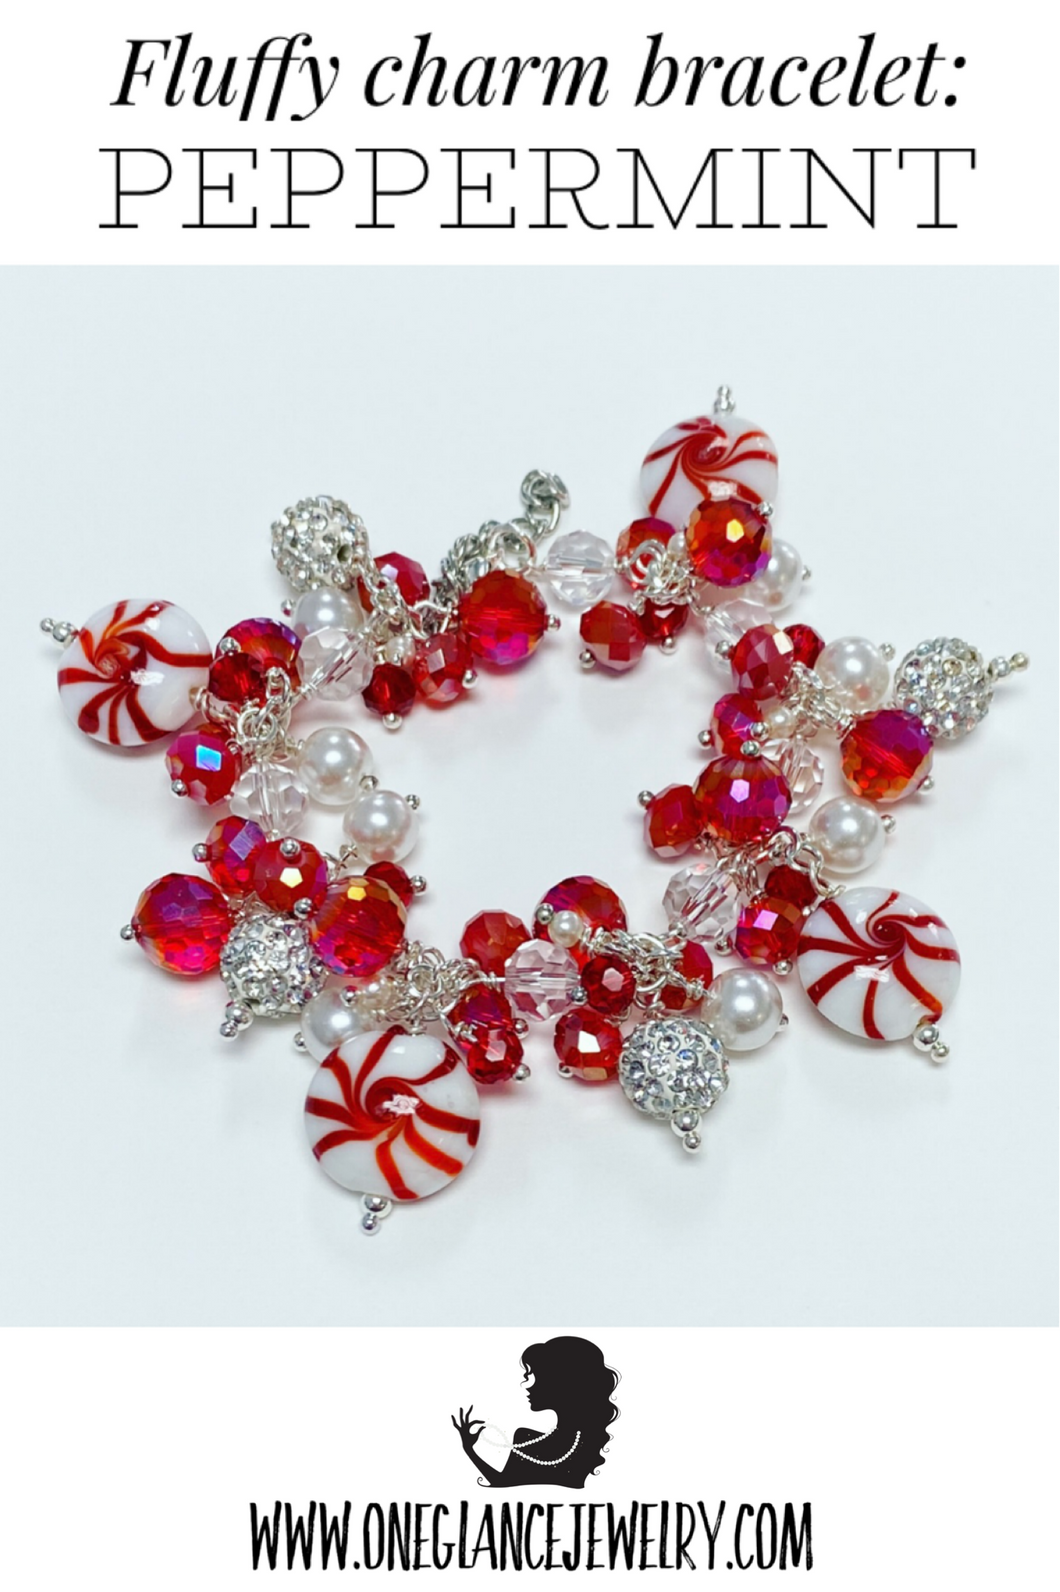 Christmas fluffy charm bracelet launch & workshop, Friday 11/17/23, 11am-1pm